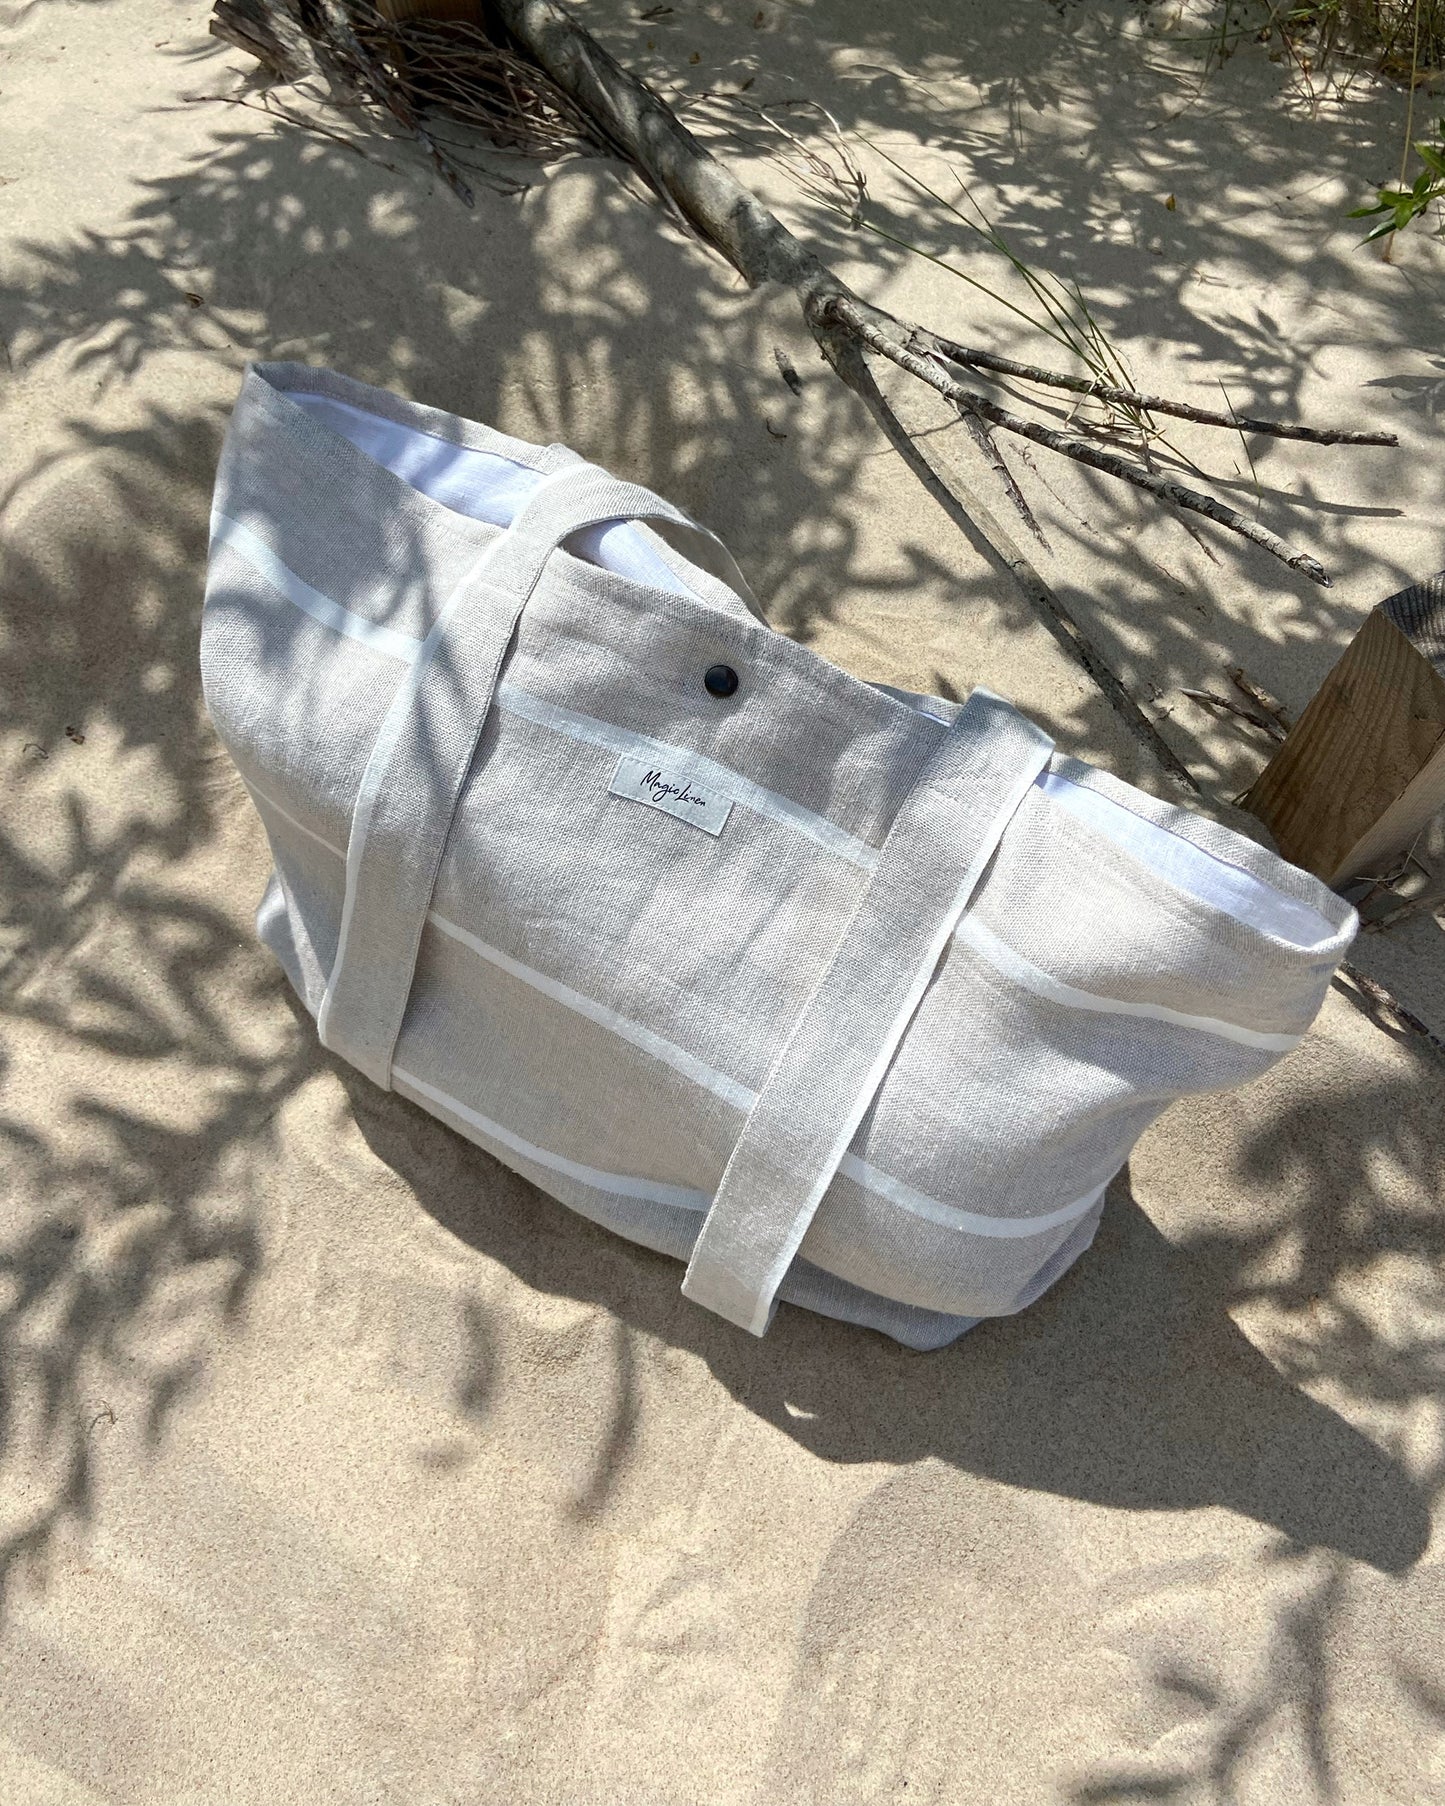 Linen beach bag in Ecru stripe - MagicLinen